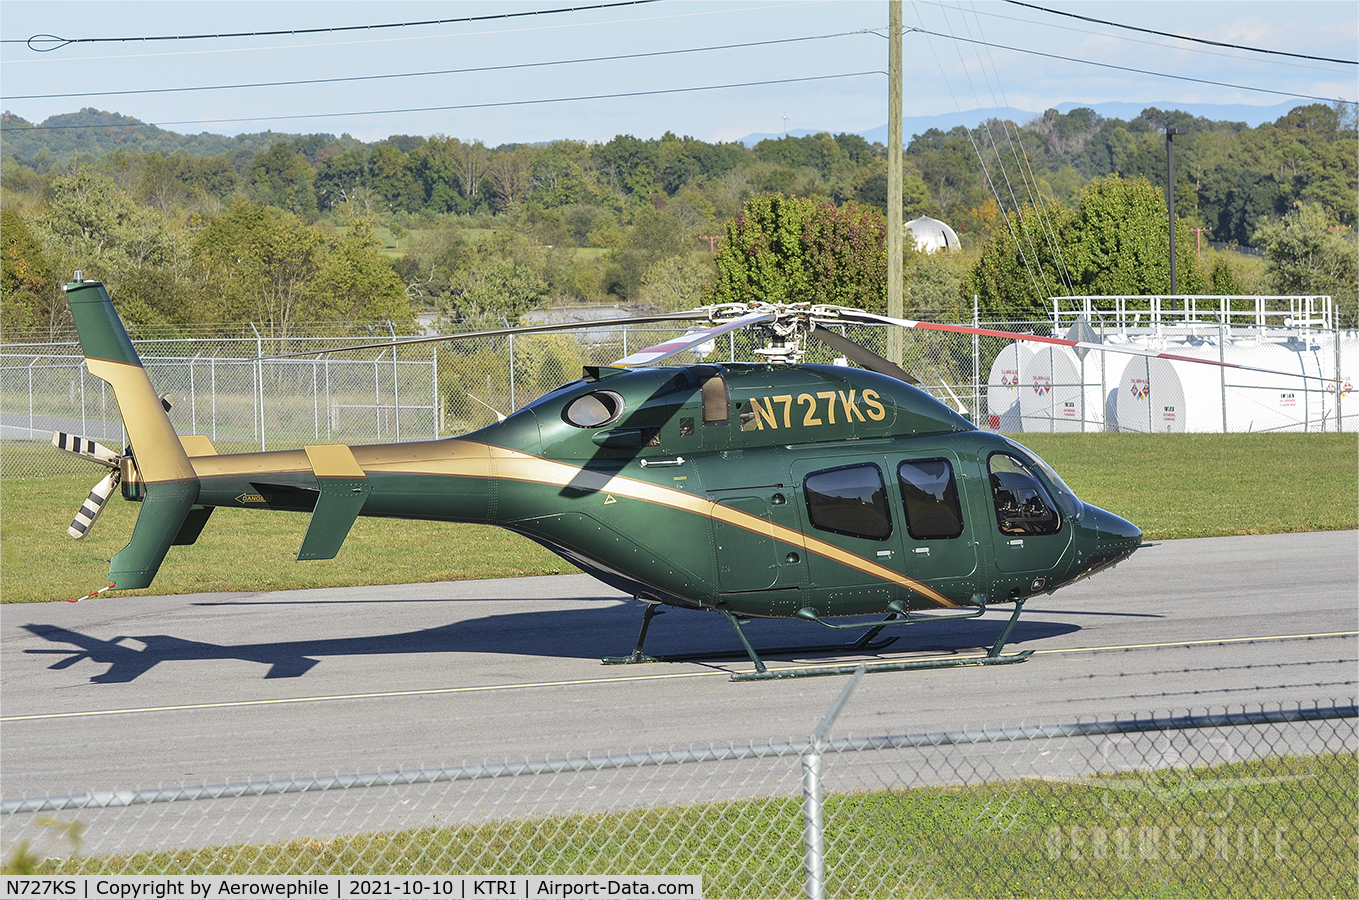 N727KS, 2010 Bell 429 GlobalRanger C/N 57023, Parked at Tri-Cities Airport (KTRI)
10Oct21